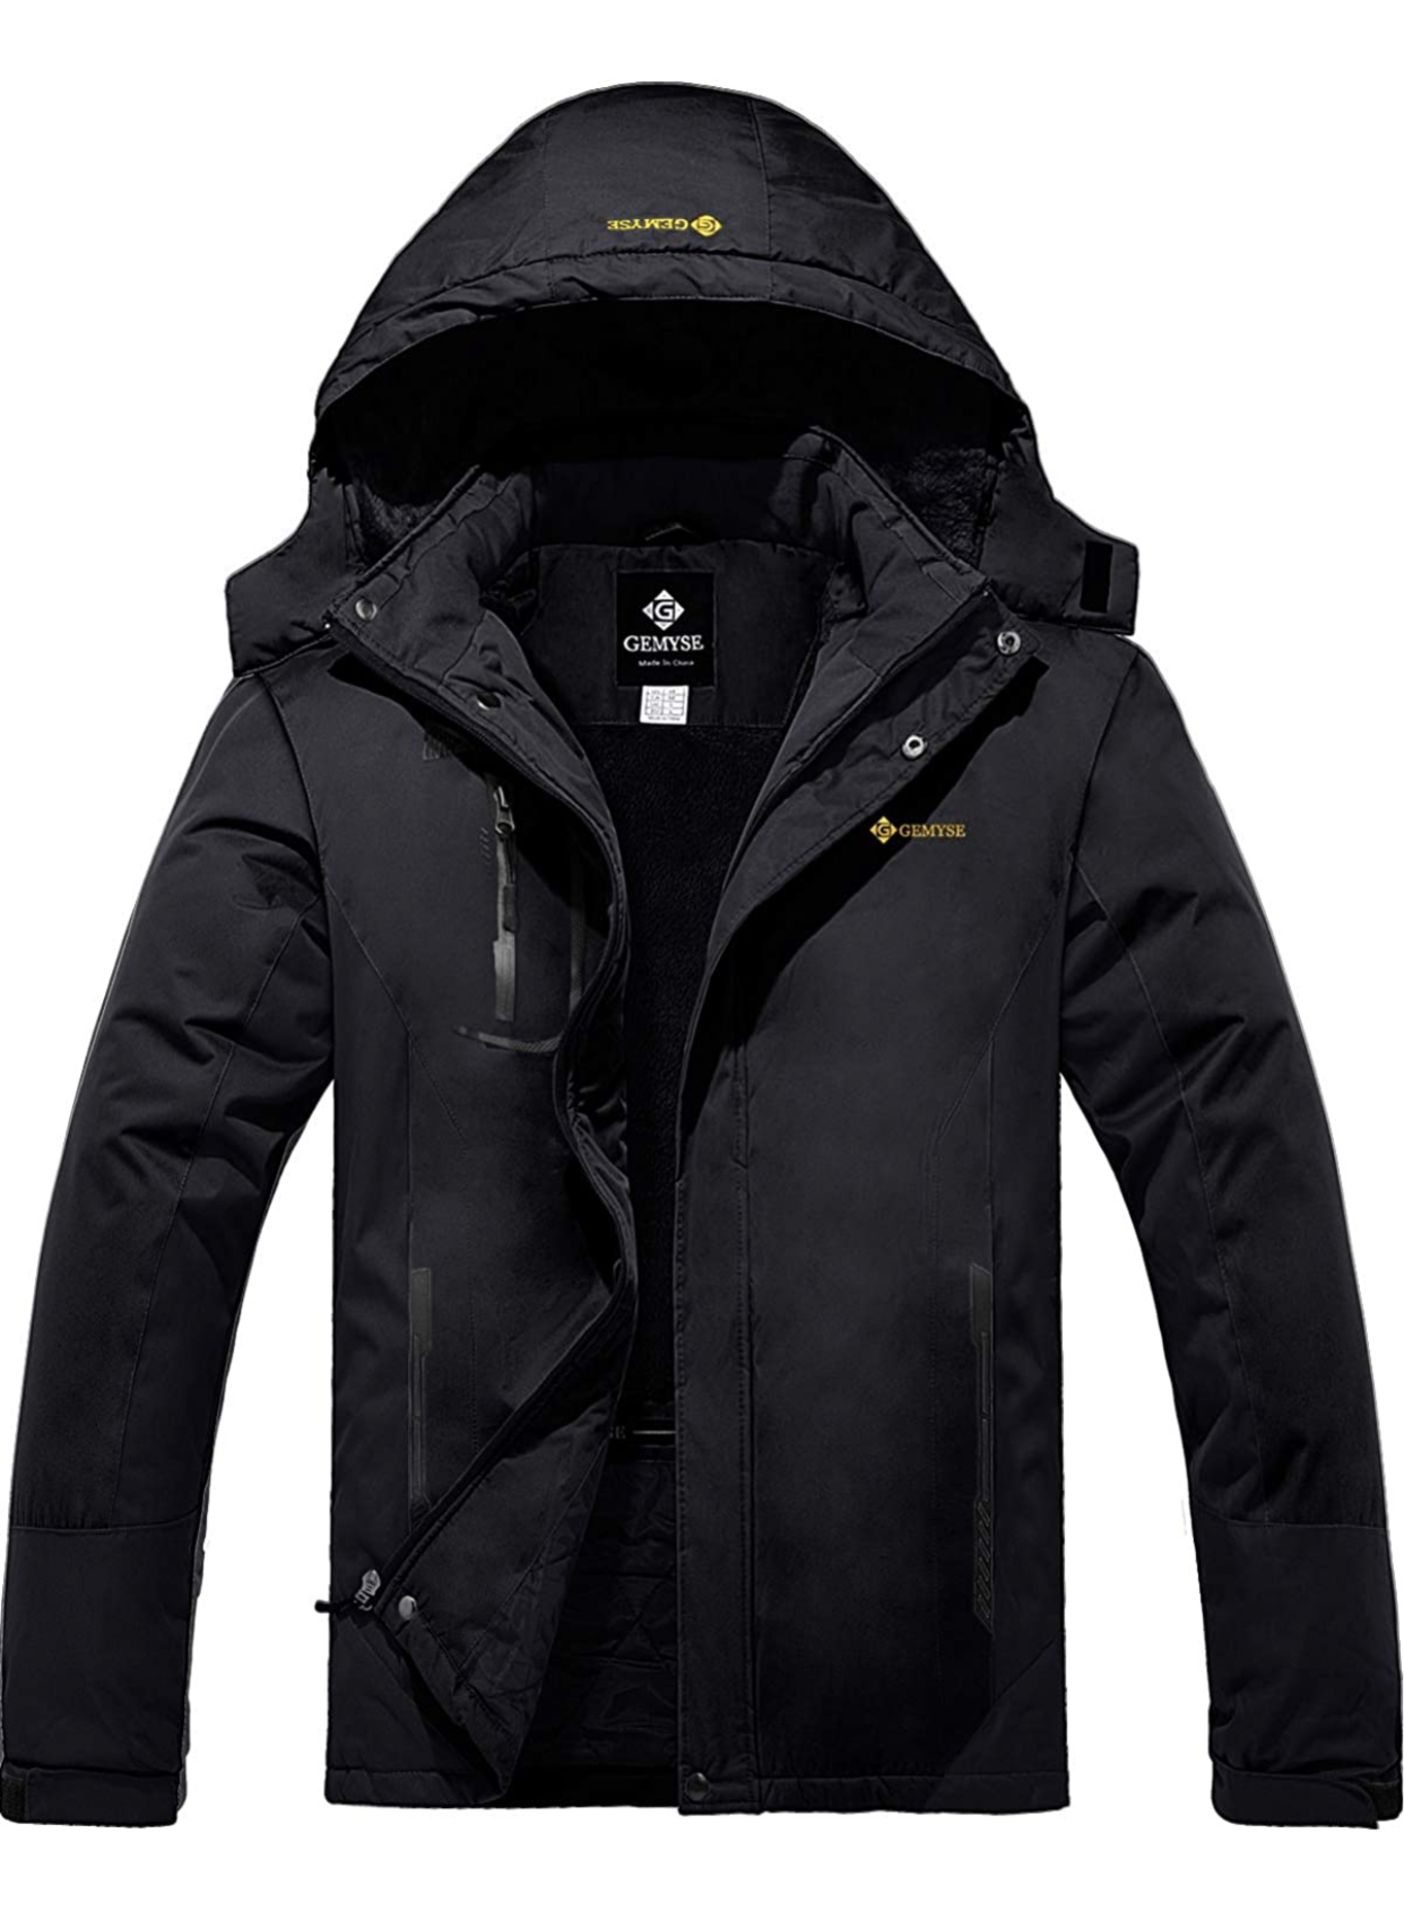 RRP £65.99 Gemyse Men's Waterproof Jacket Windproof Coat with Hood, Large